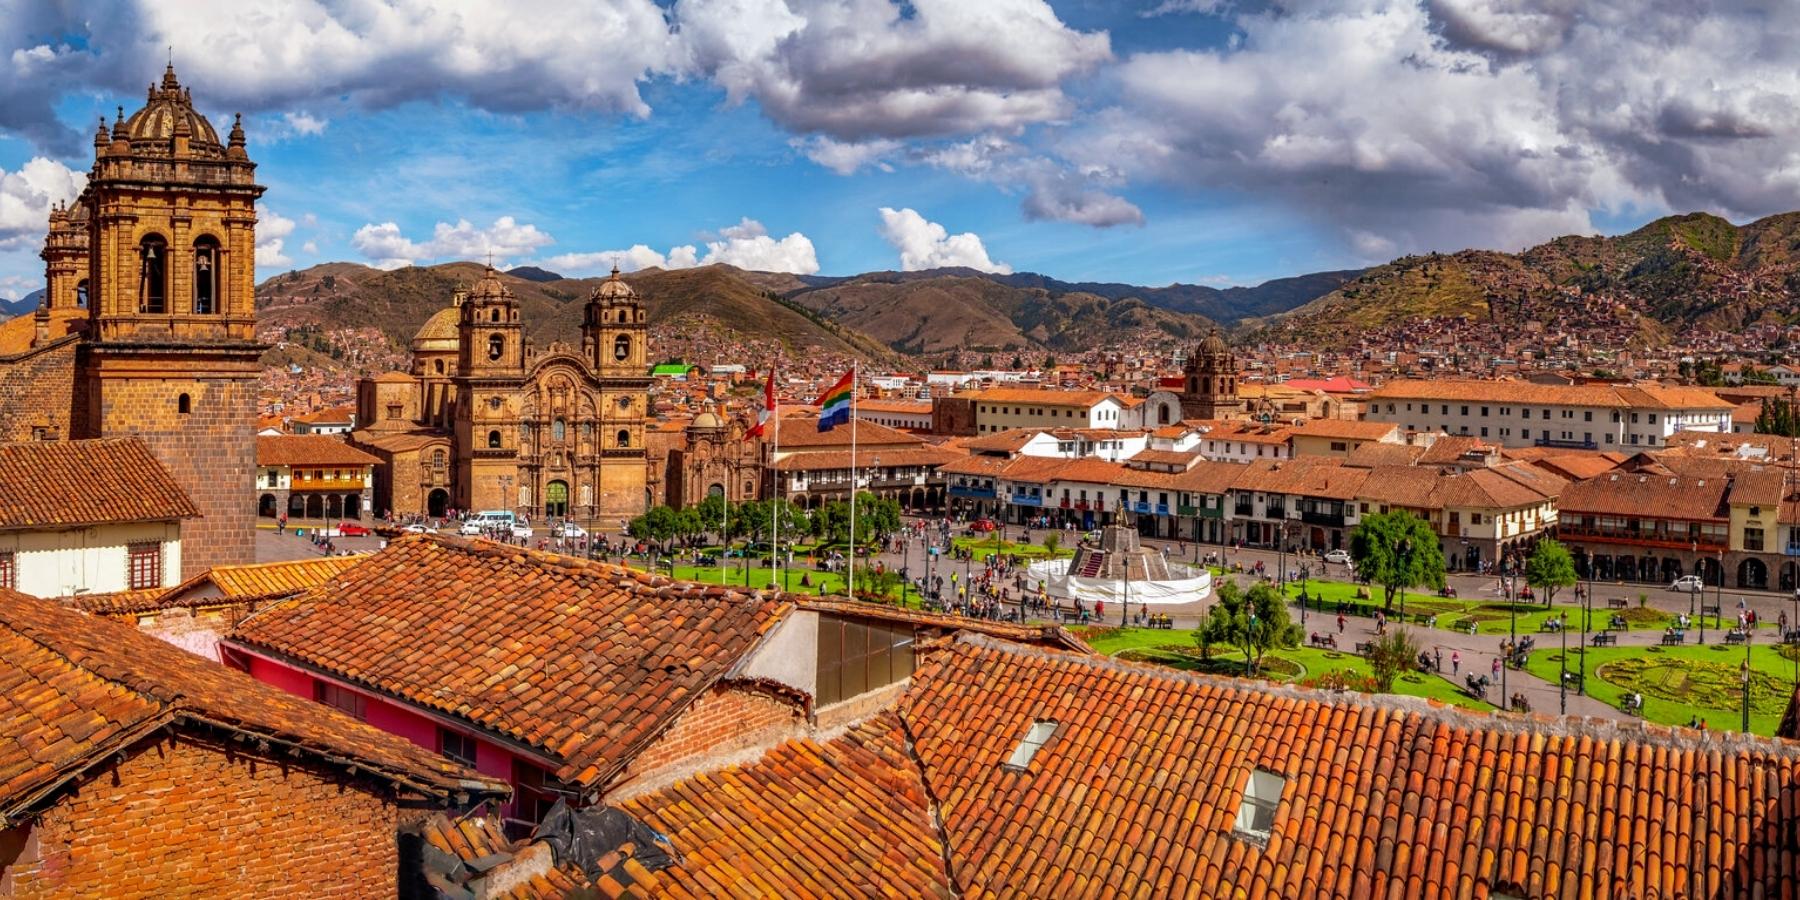 Cusco Day Tours